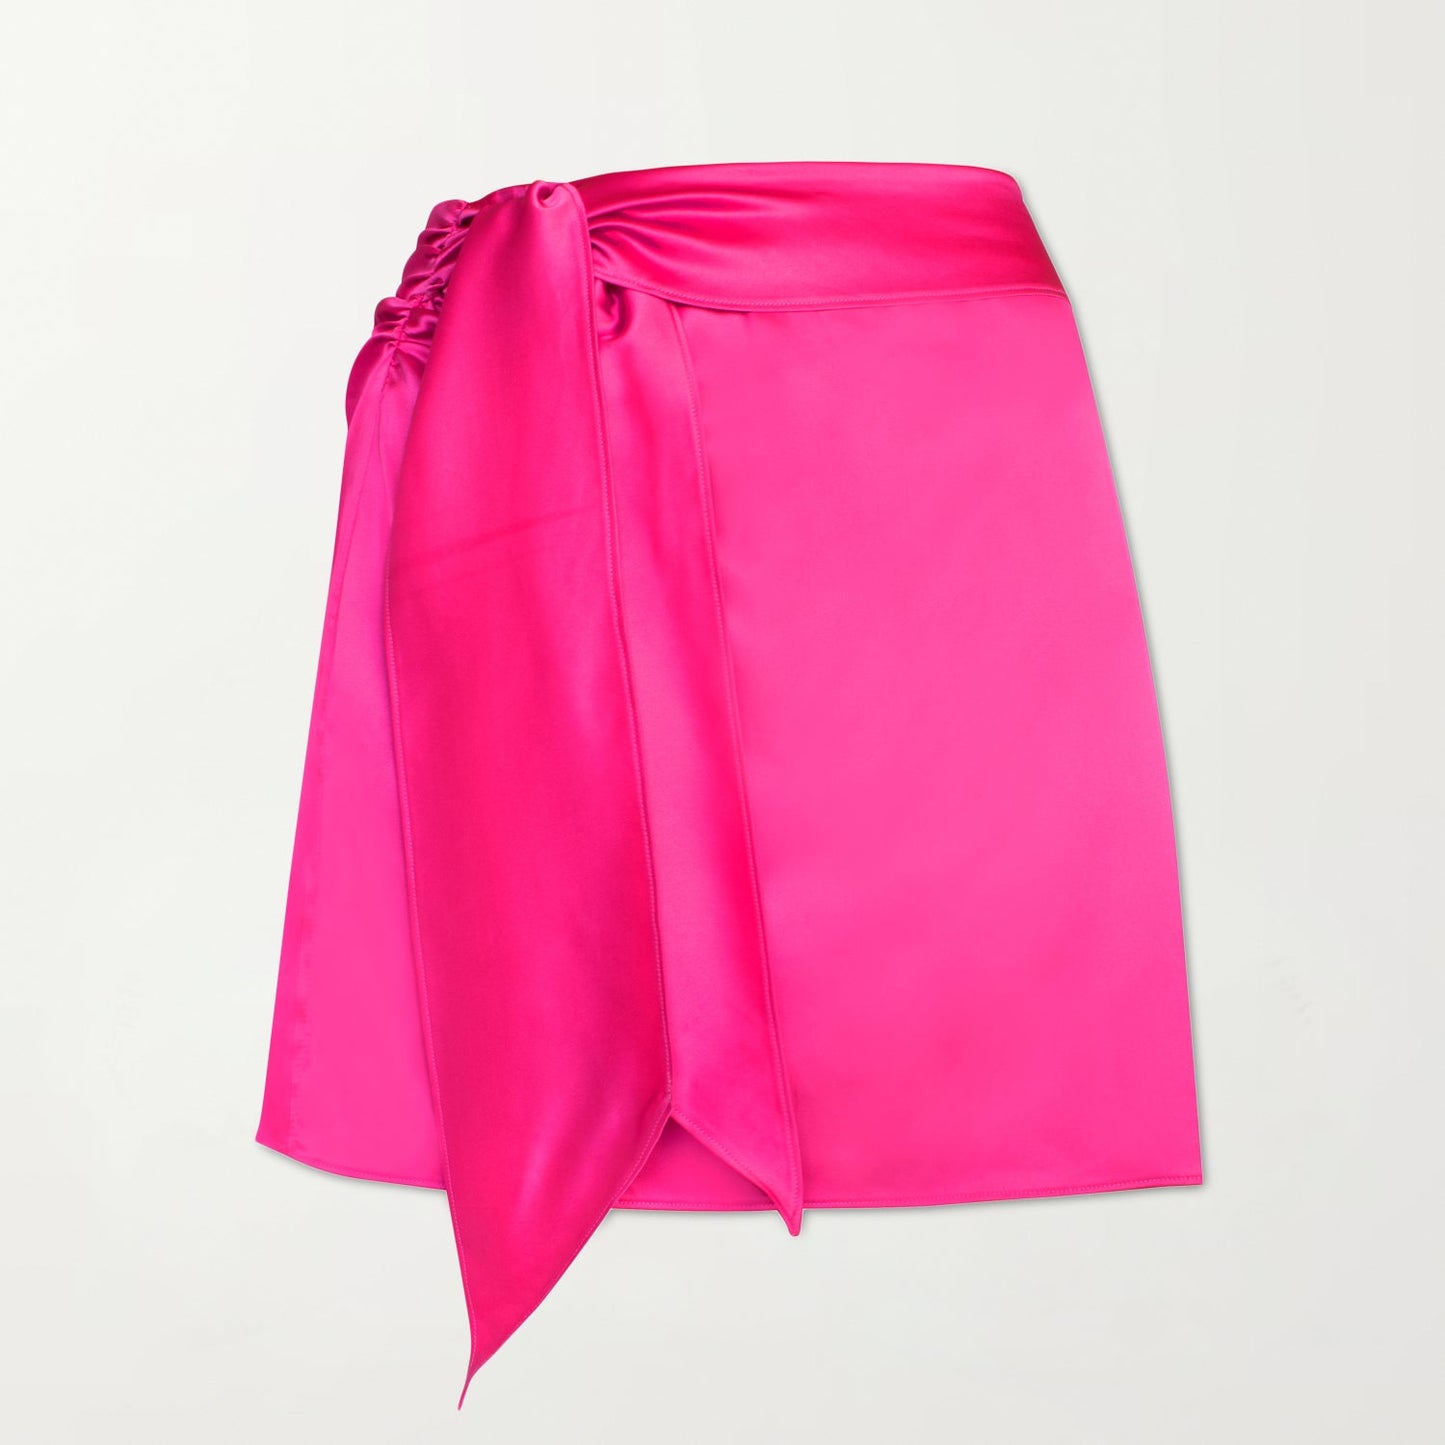 The St. Tropez Skirt in Fuchsia